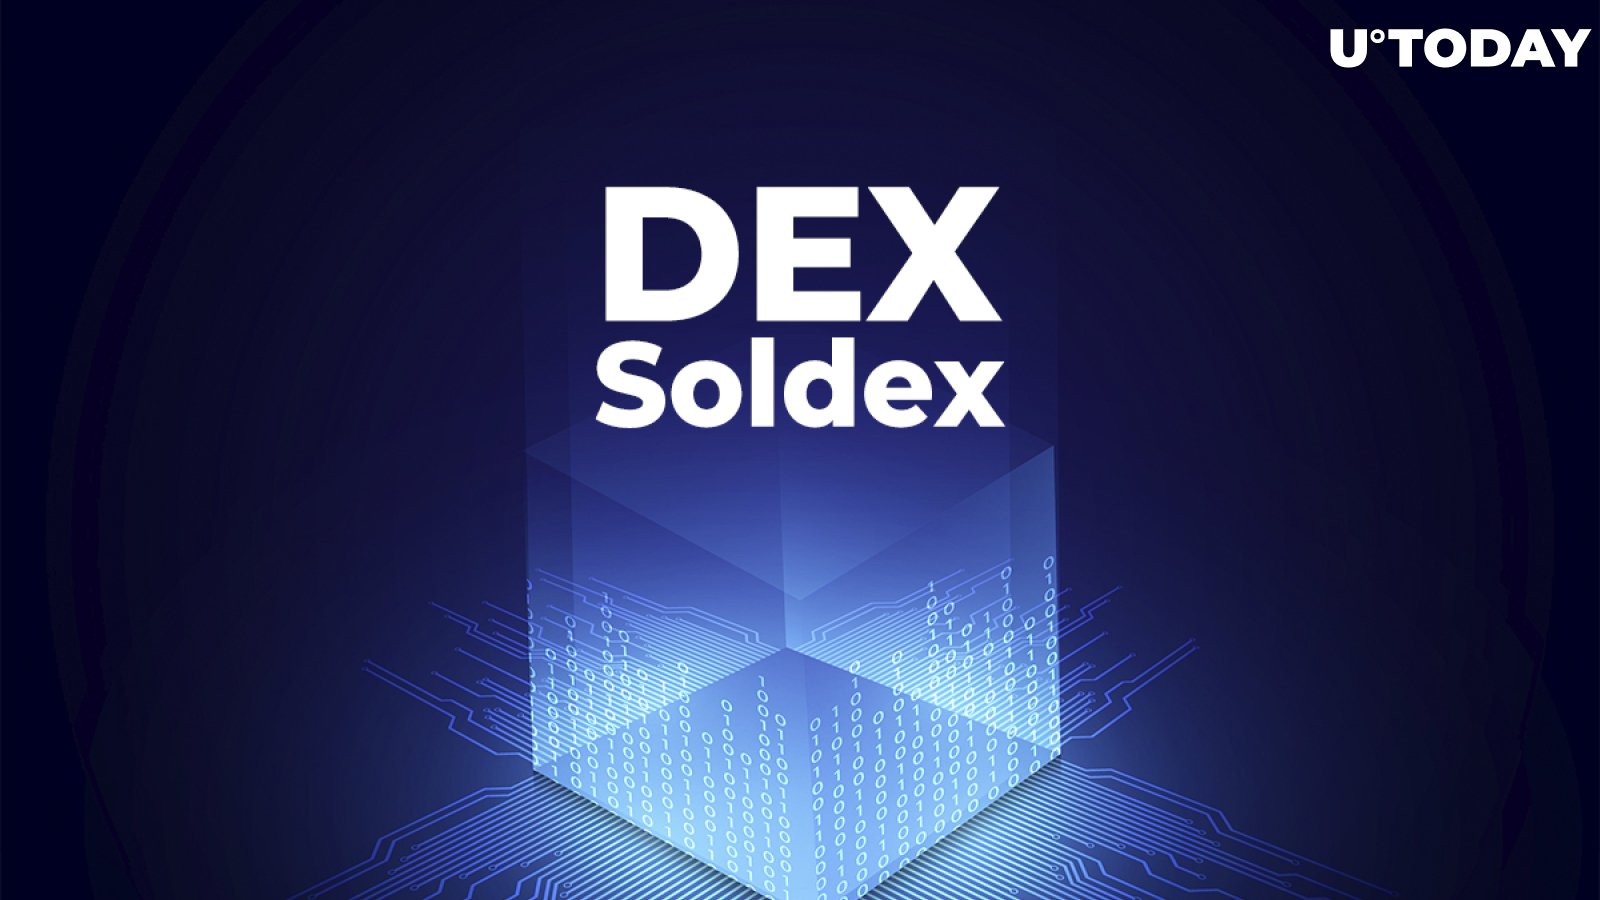 Solana-Based DEX Soldex Partners with Speqto Software Vendor: Details